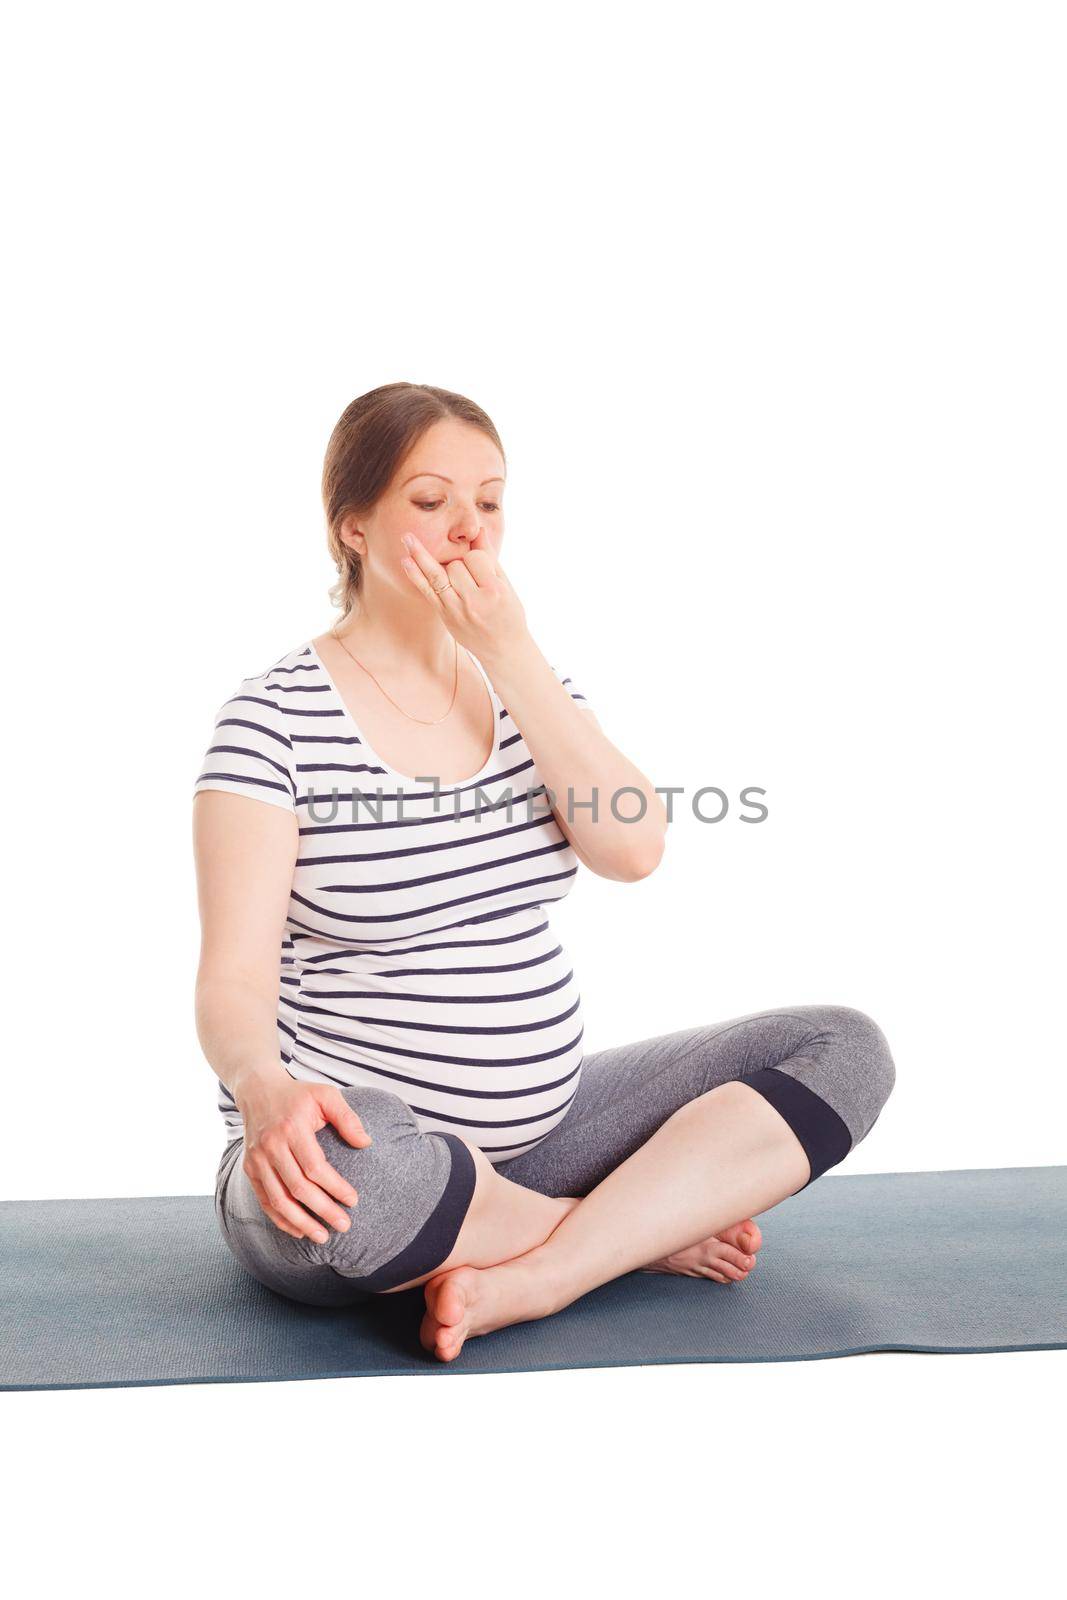 Pregnant woman doing yoga breathing exercise Pranayama by dimol